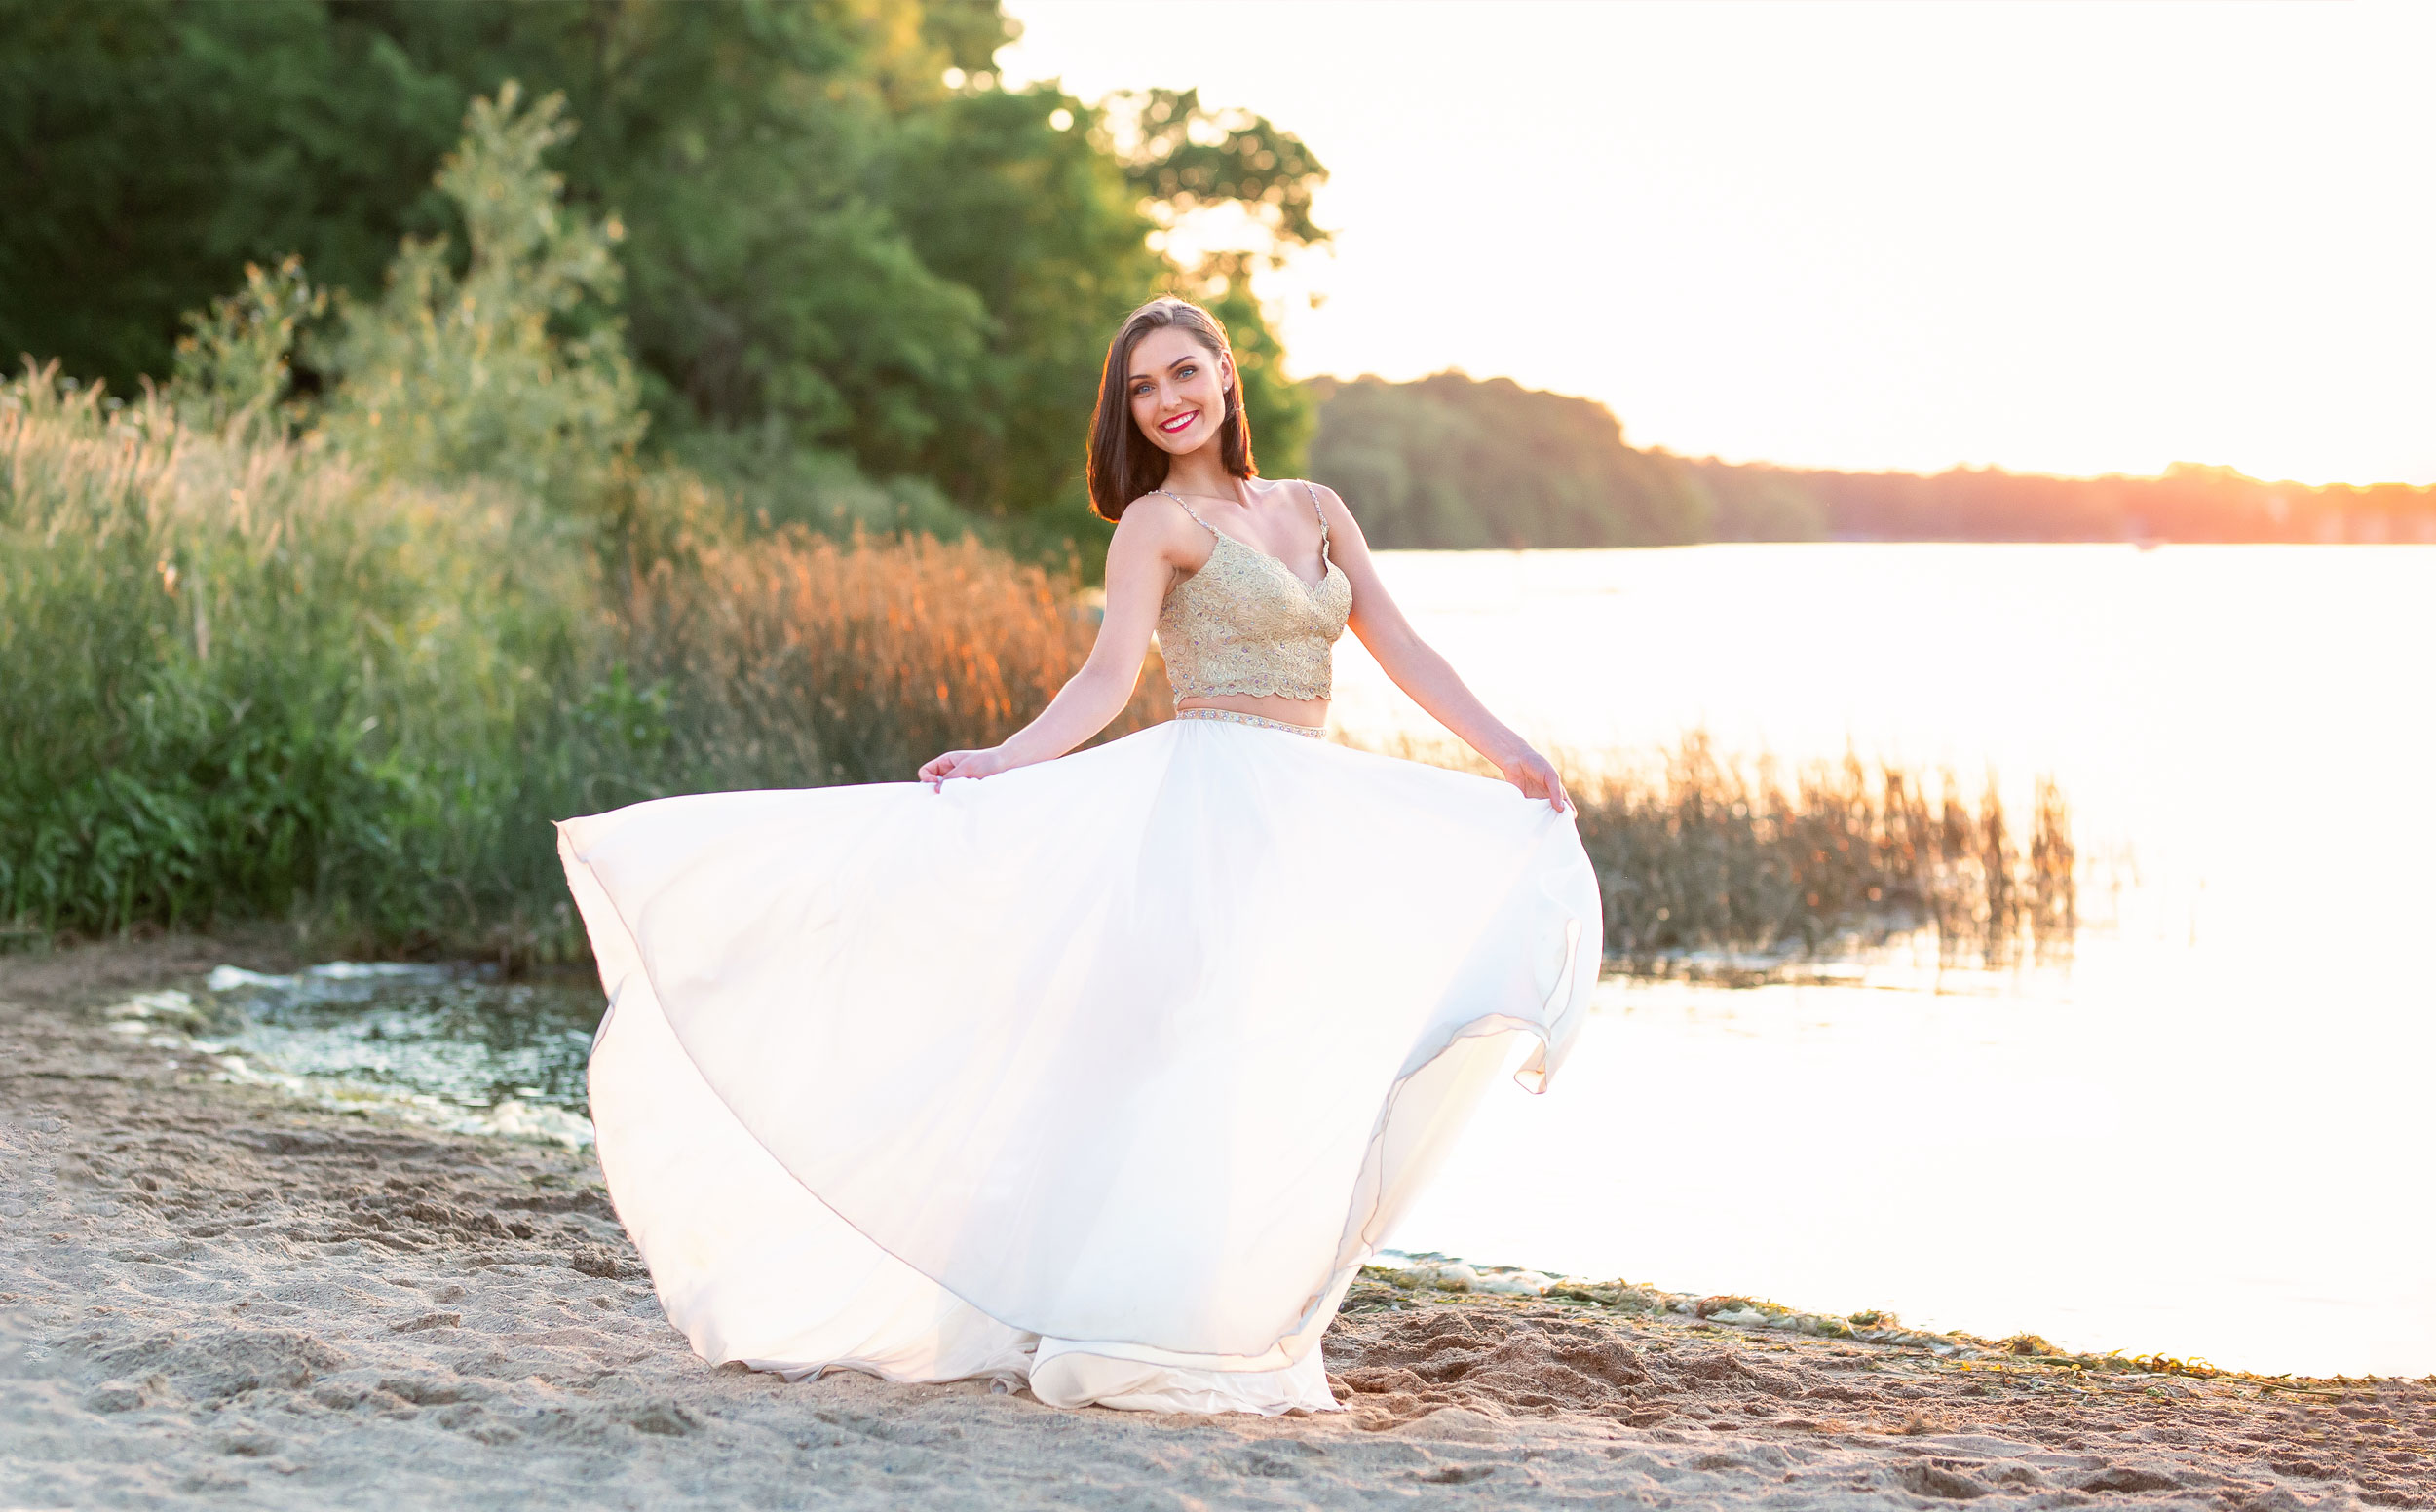 Girl in formal dress twirling by lake